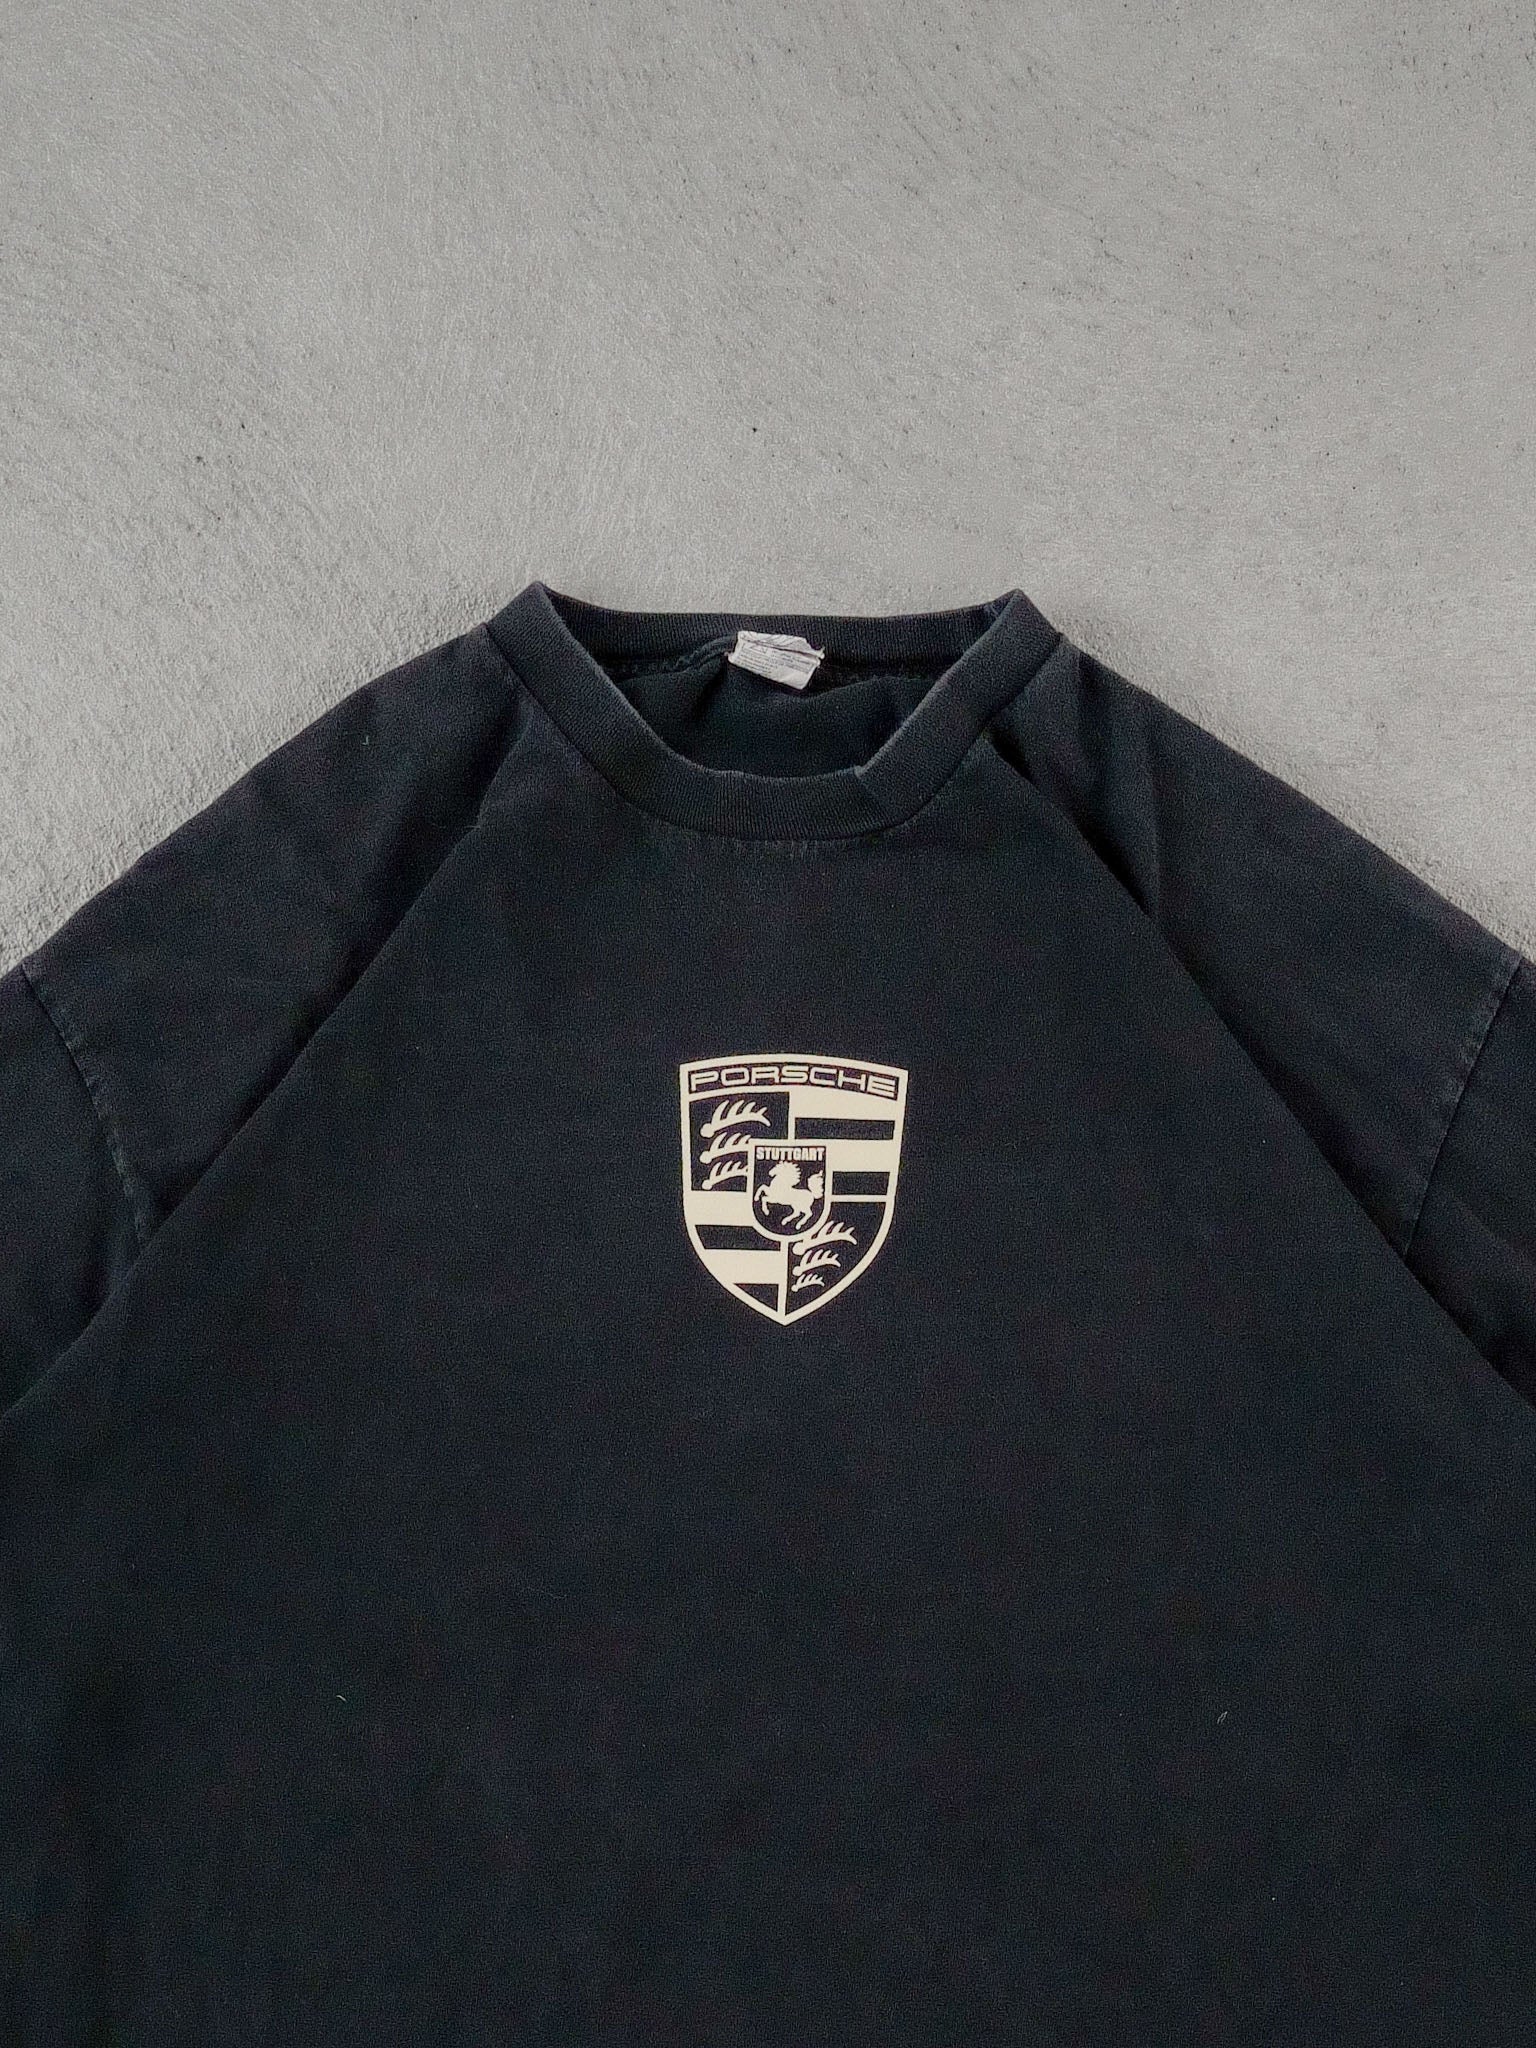 Vintage 90s Black Porsche Emblem Long Sleeve (L)